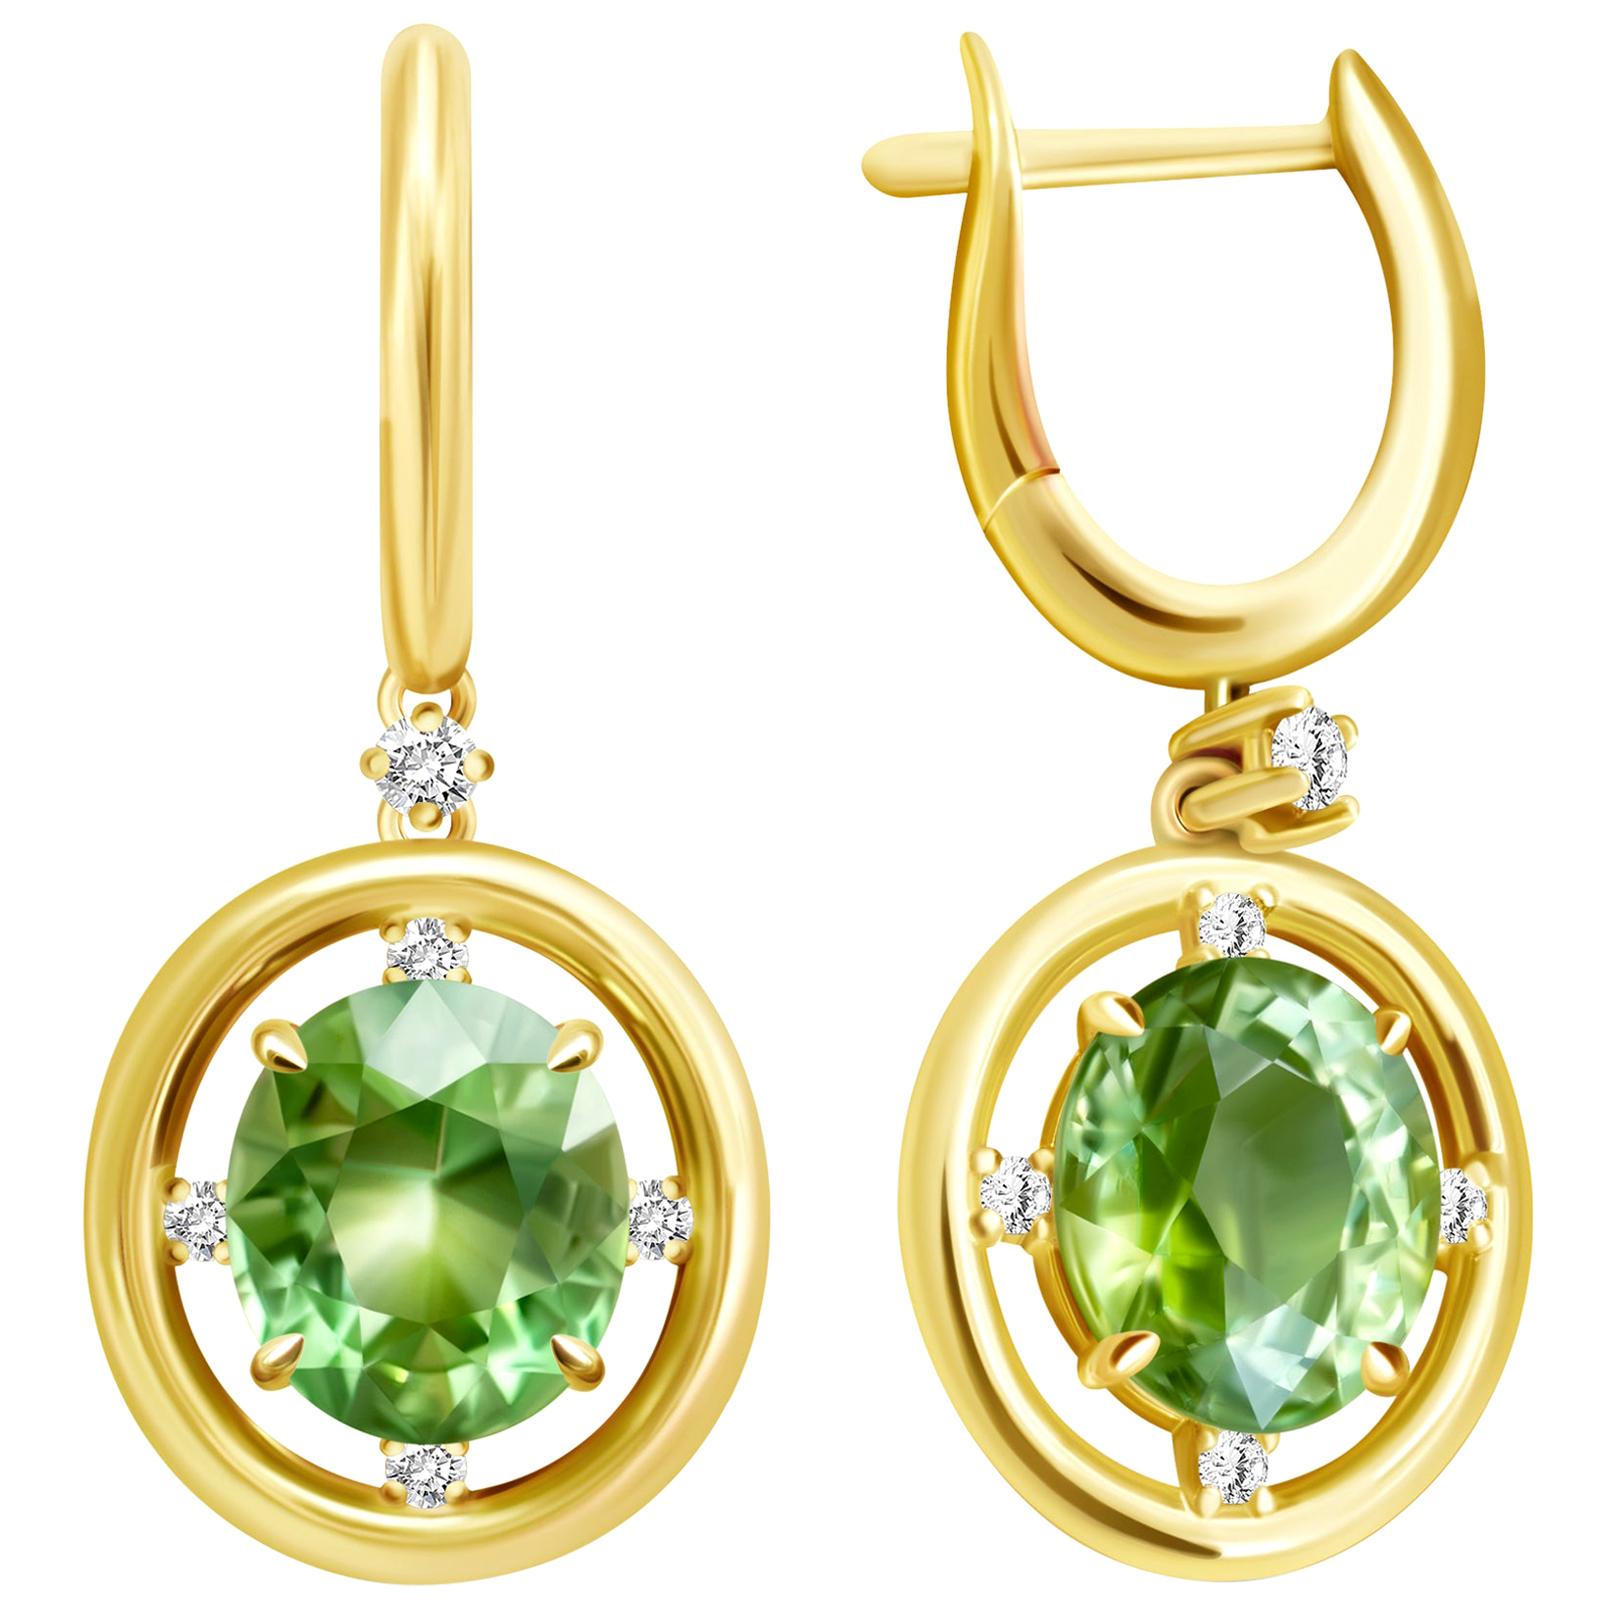 10 Carat Apple Green Mint Tourmaline 14 Karat Yellow Gold Earrings